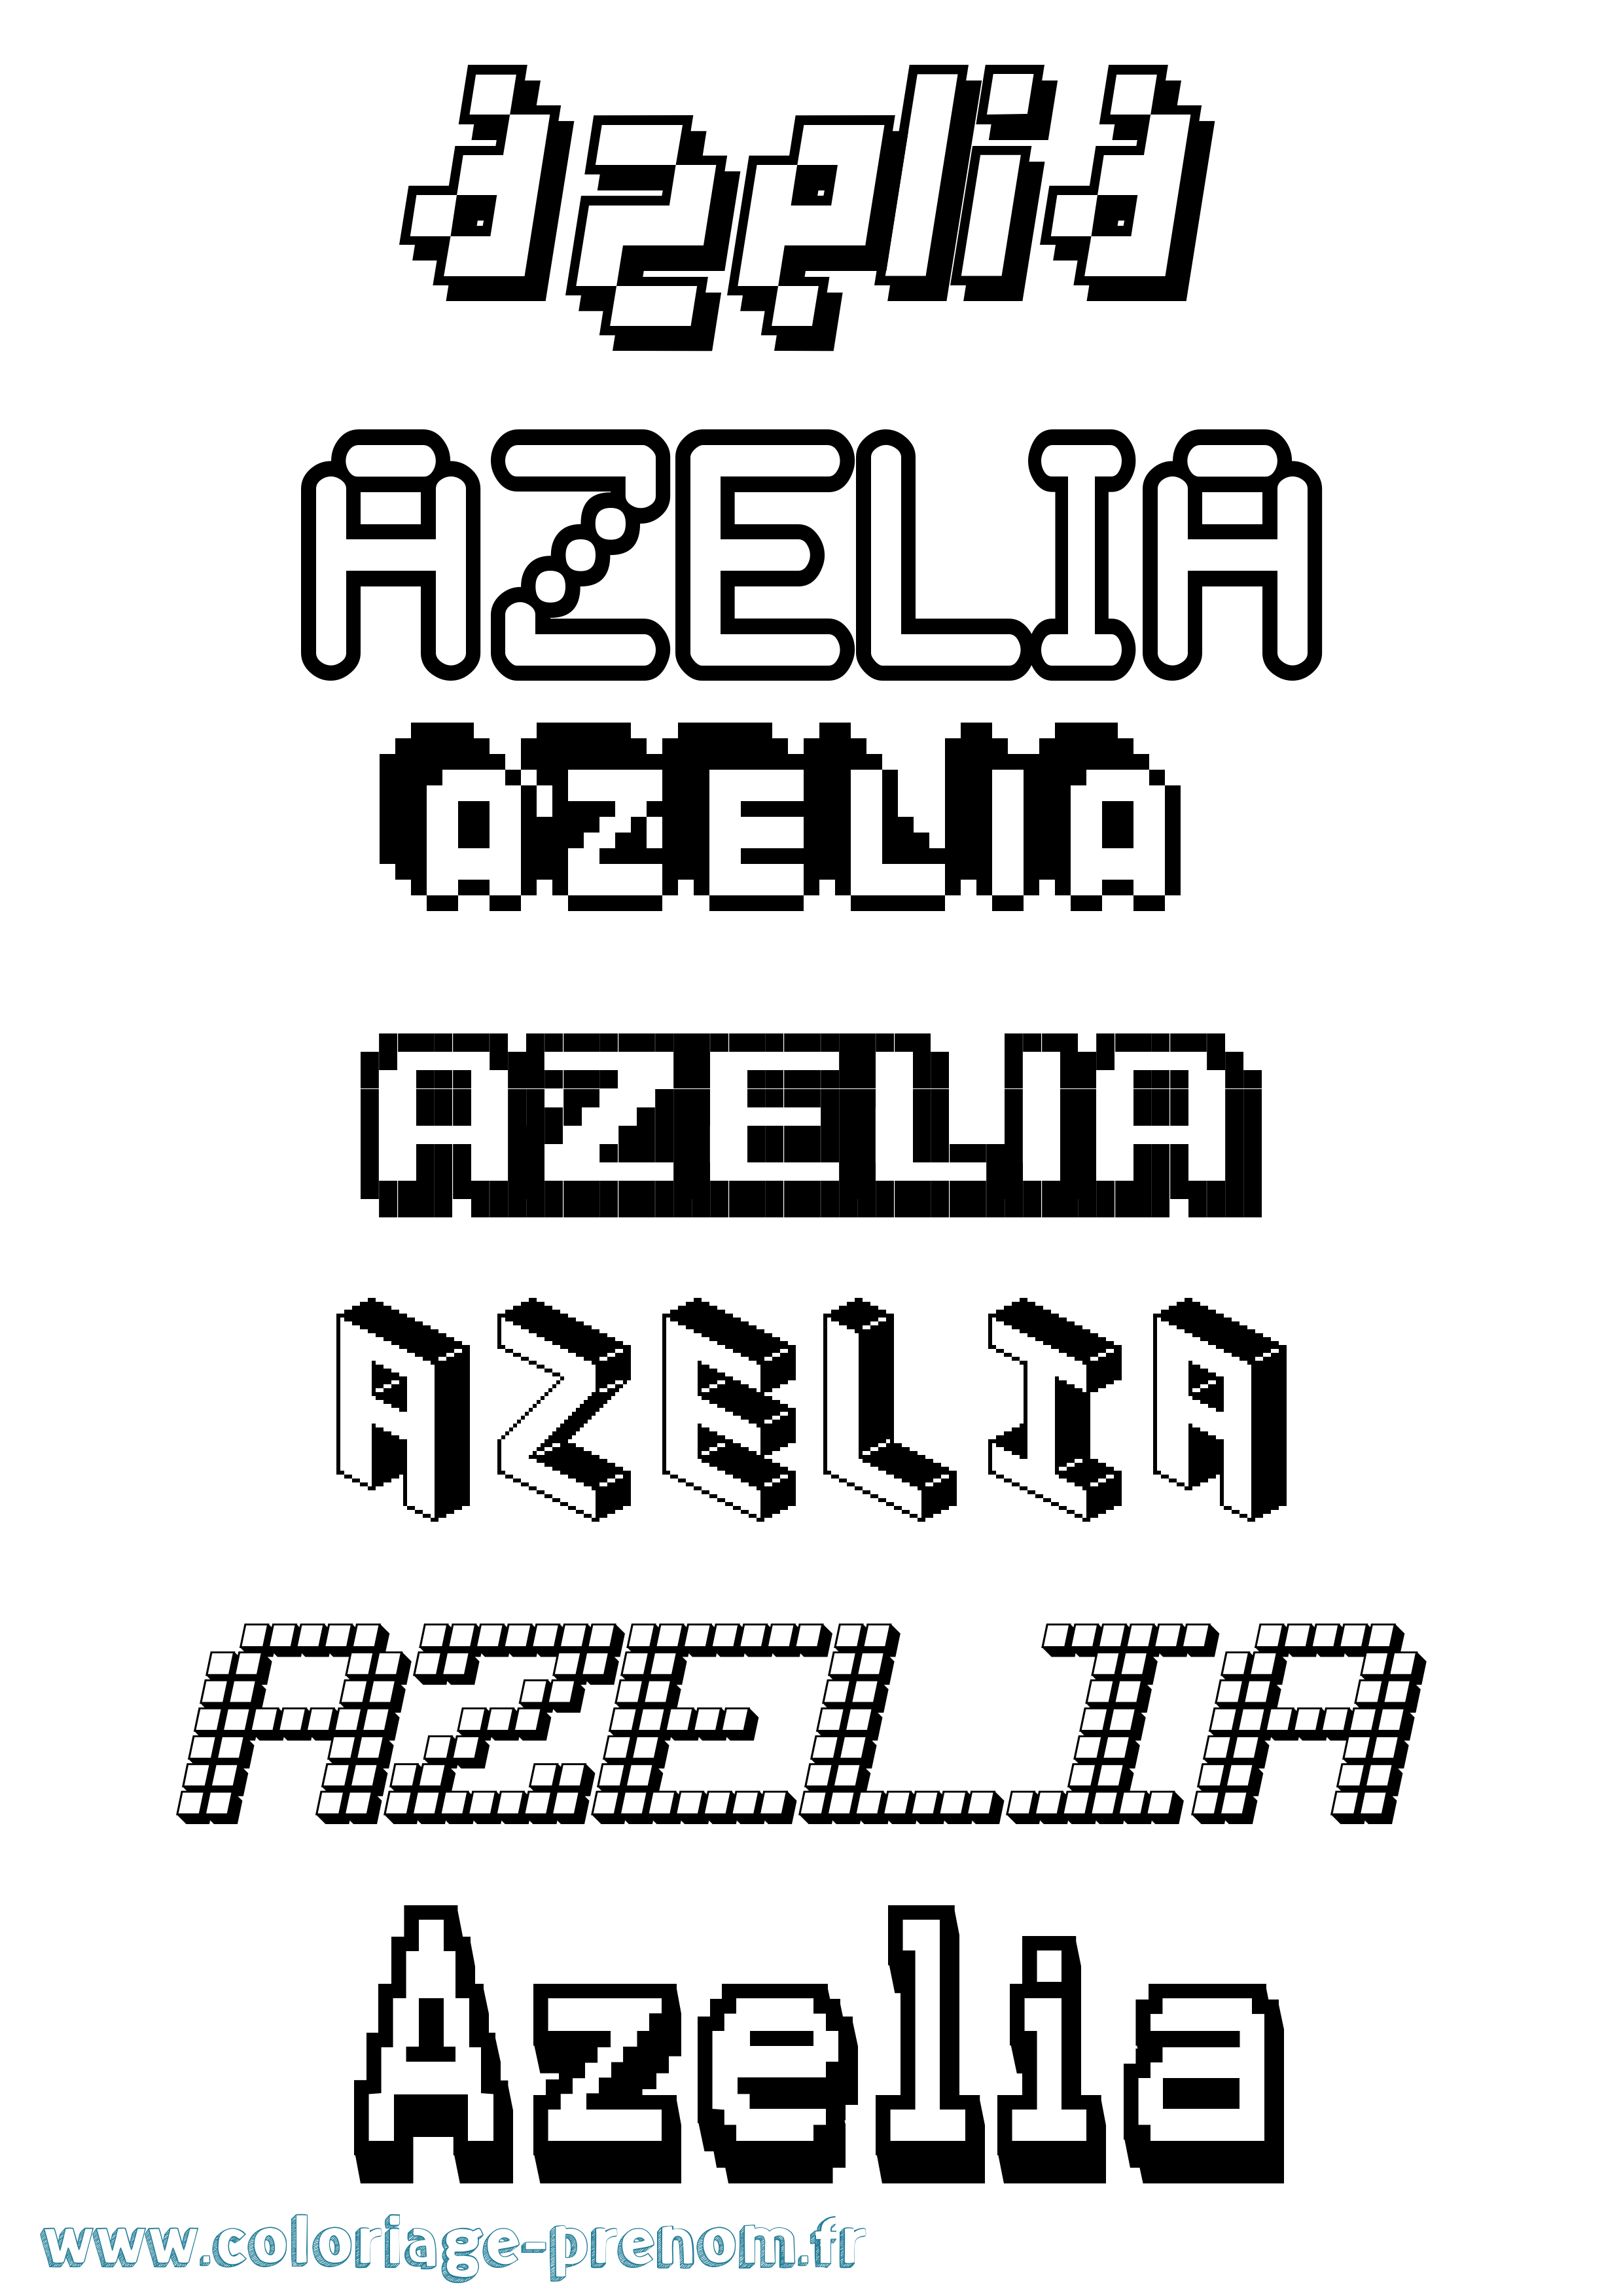 Coloriage prénom Azelia Pixel